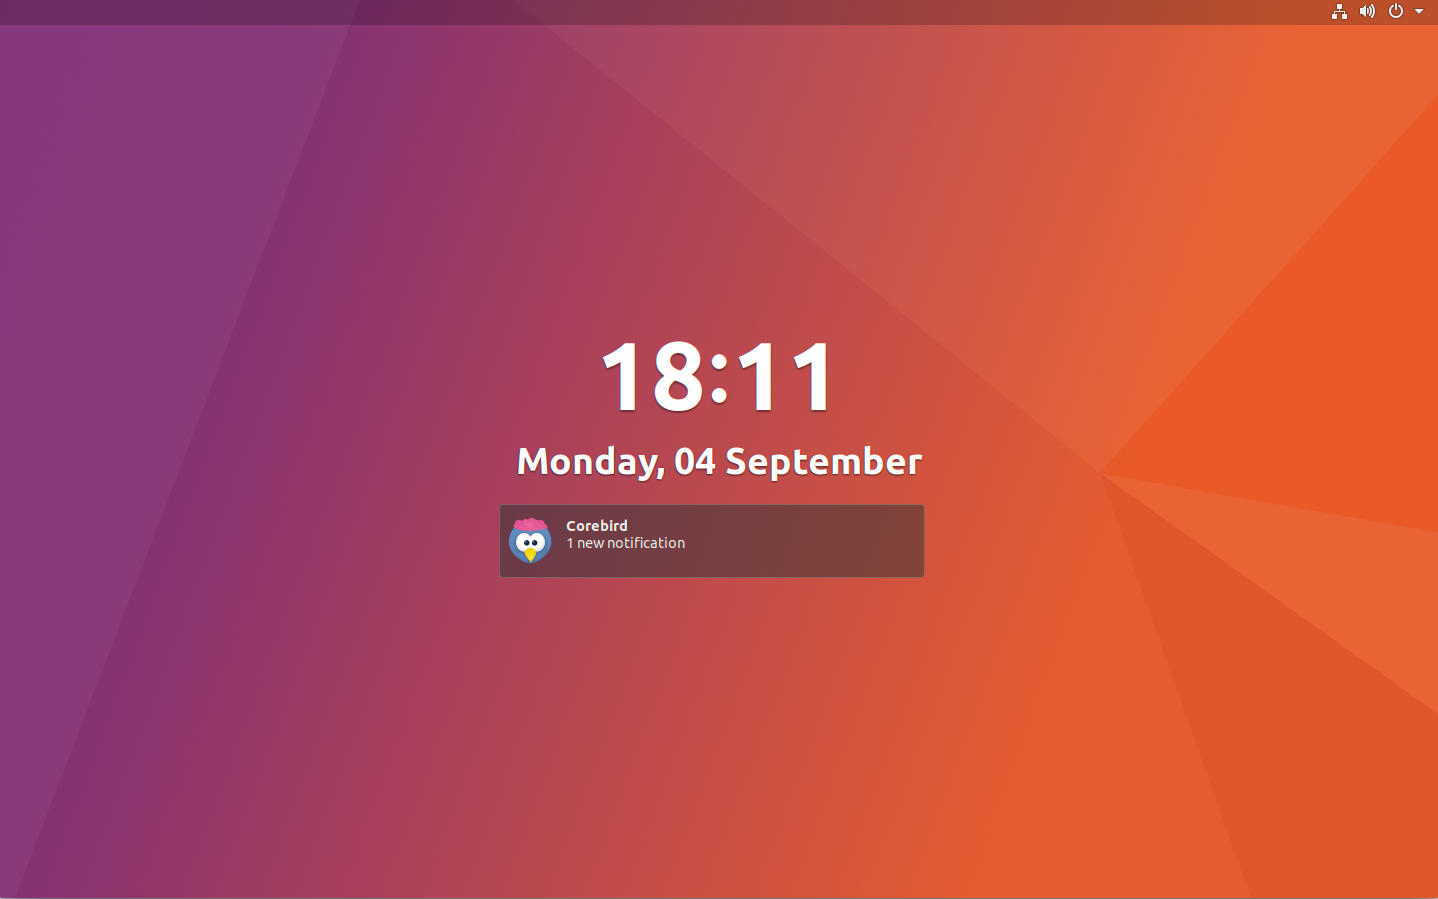 Linux экран блокировки. Ubuntu экран. Экран убунту. Заблокировал Ubuntu. Экран блокировки linux